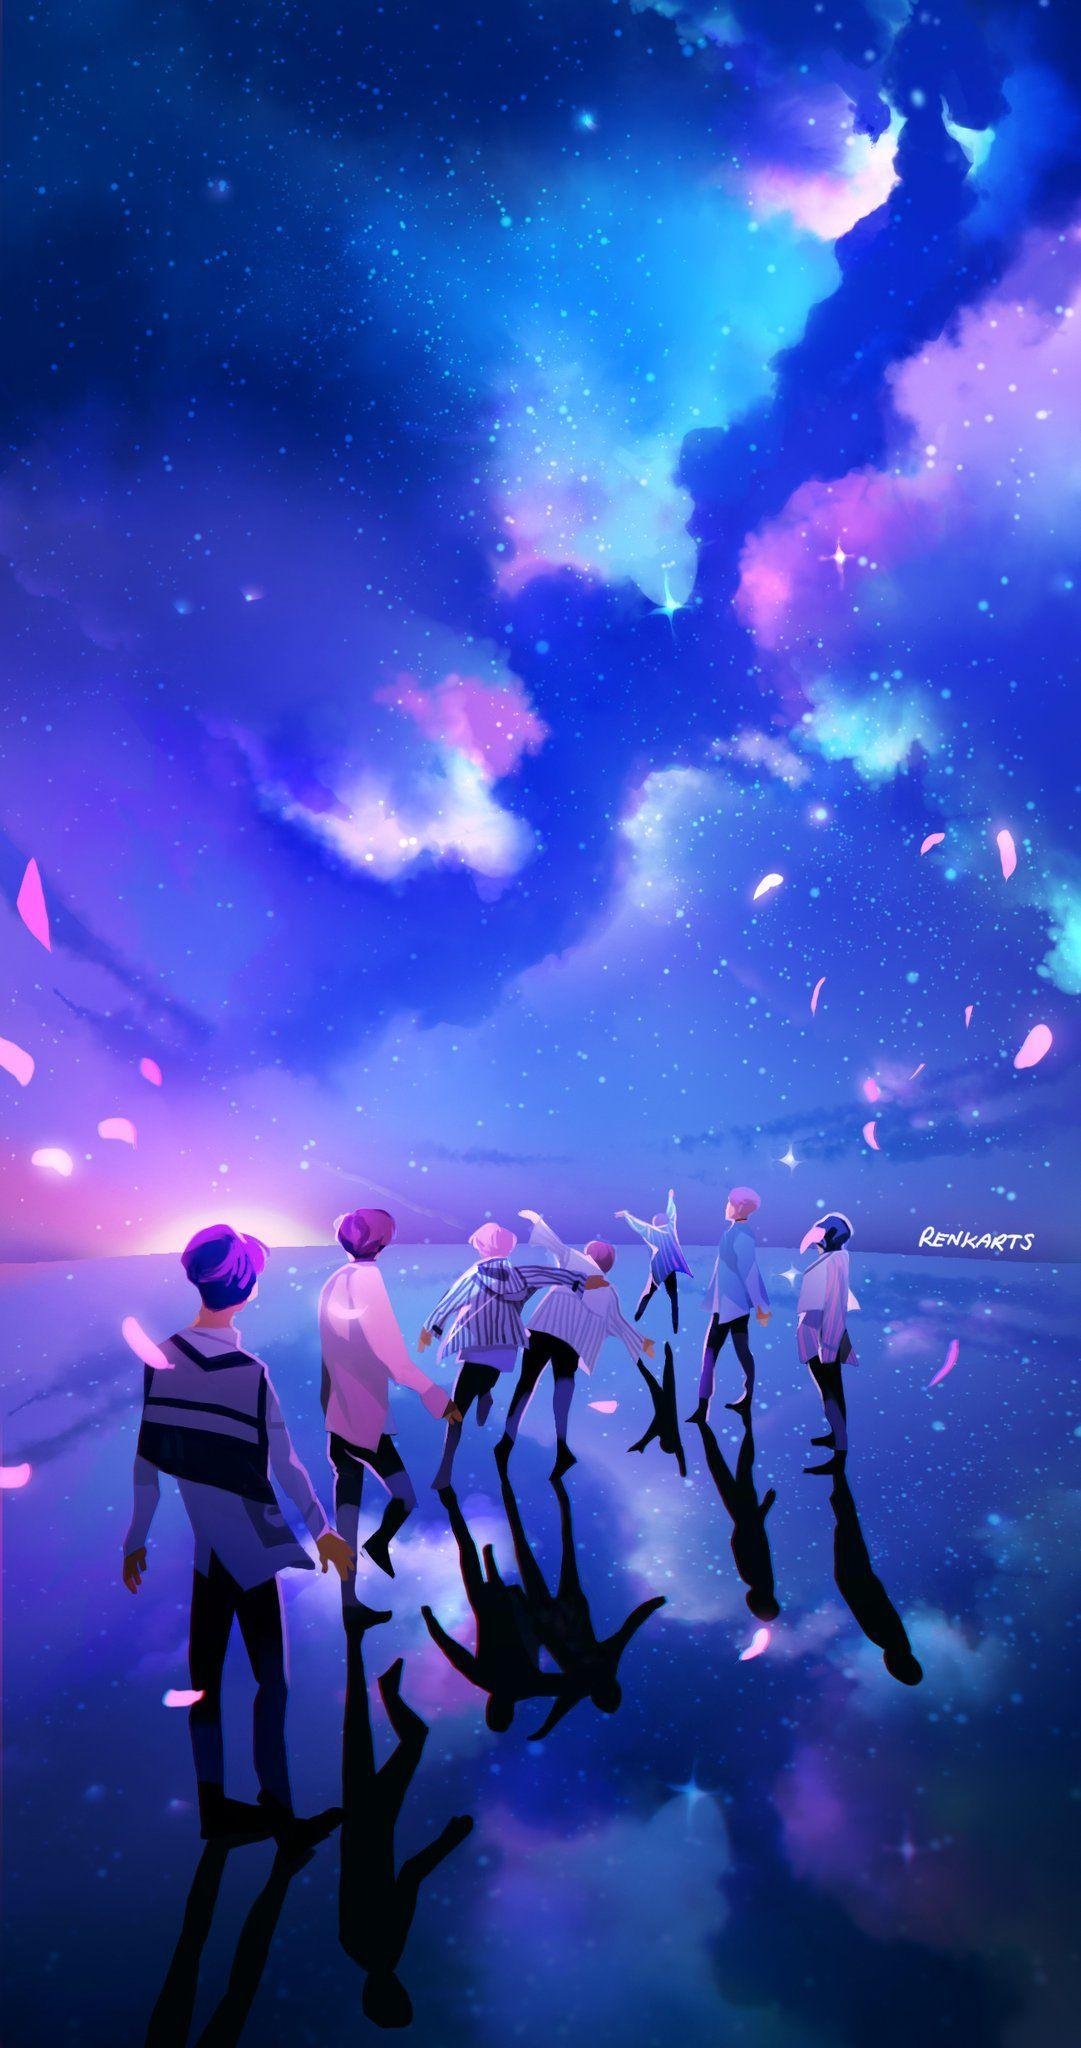 6+] Galaxy Anime Wallpapers - WallpaperSafari